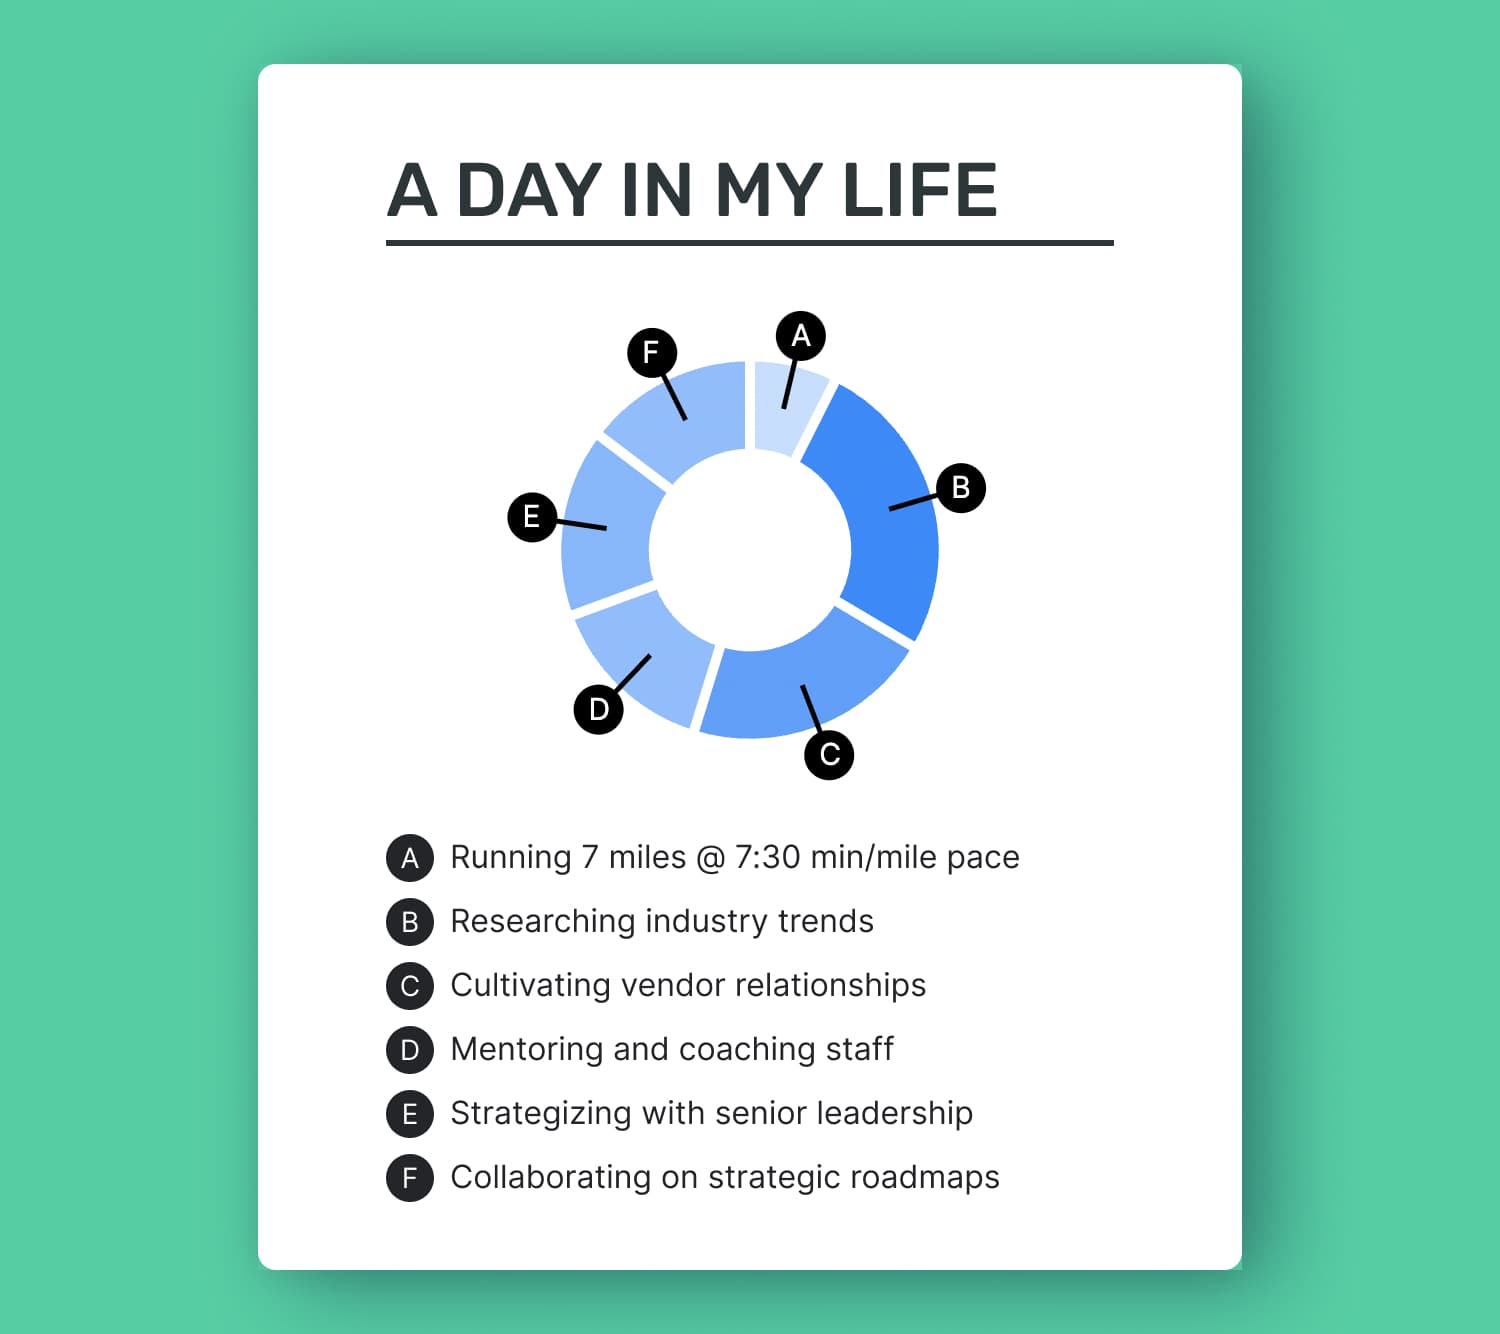 day of my life on resume - Enhancv resume section